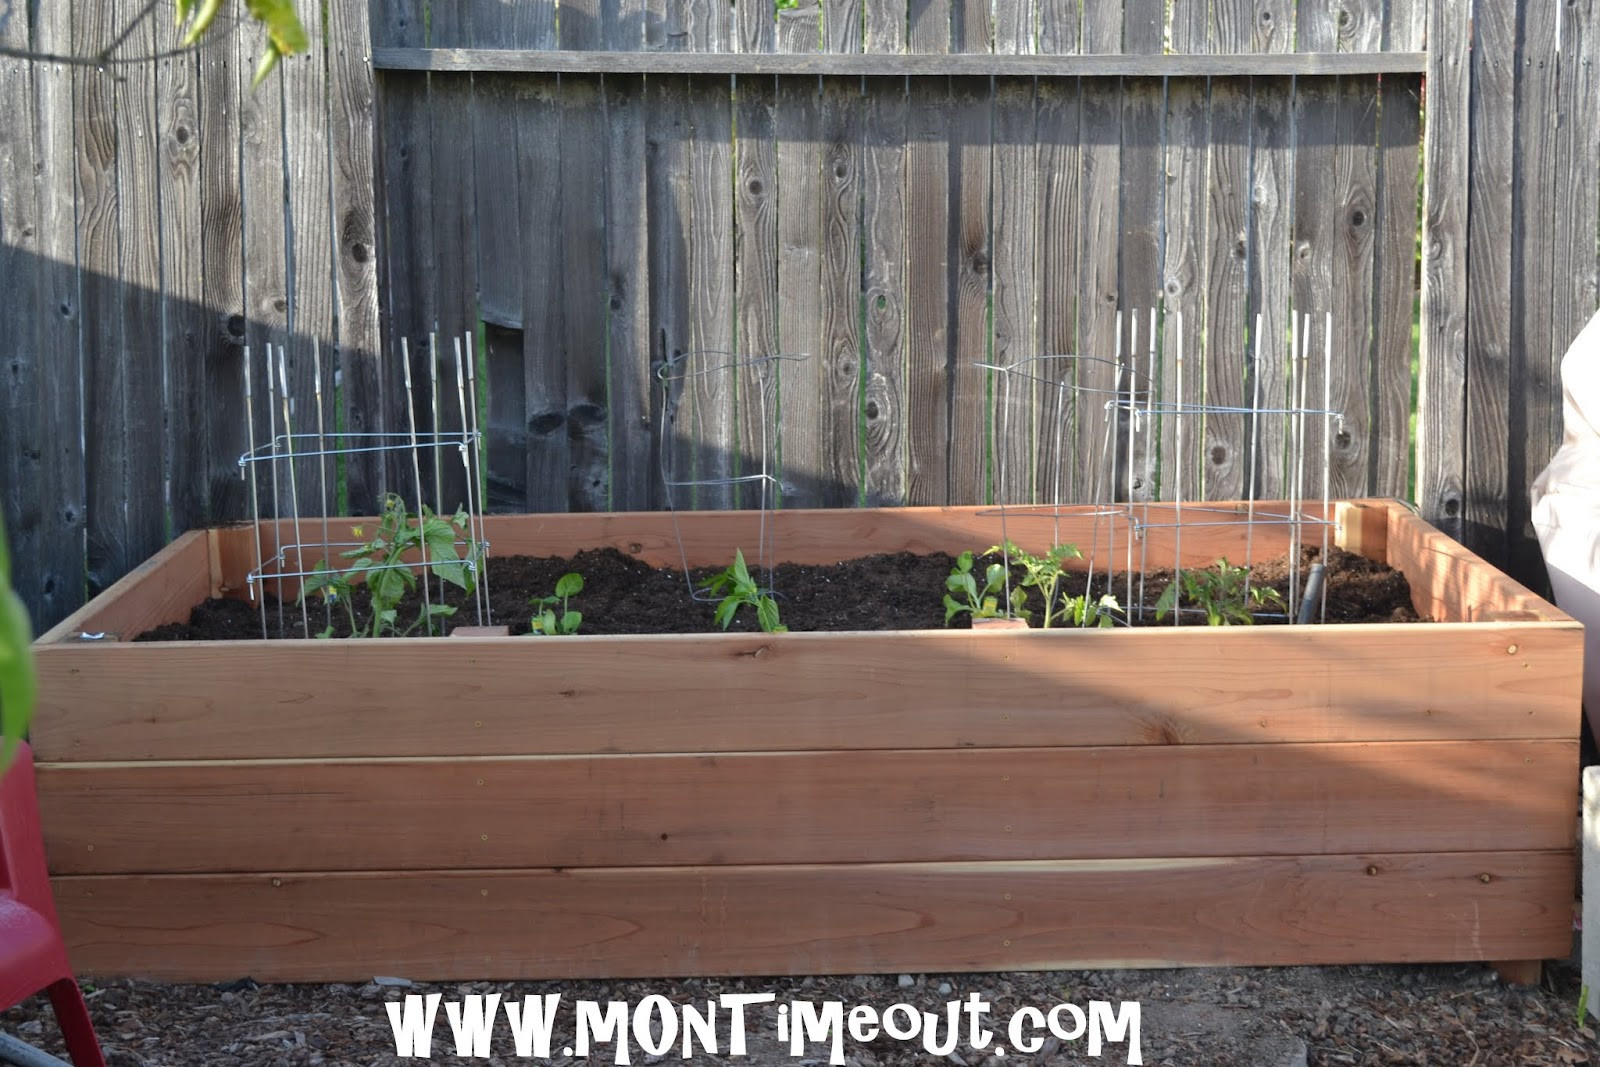 Best ideas about DIY Planter Box
. Save or Pin DIY Garden Planter Box Tutorial Now.